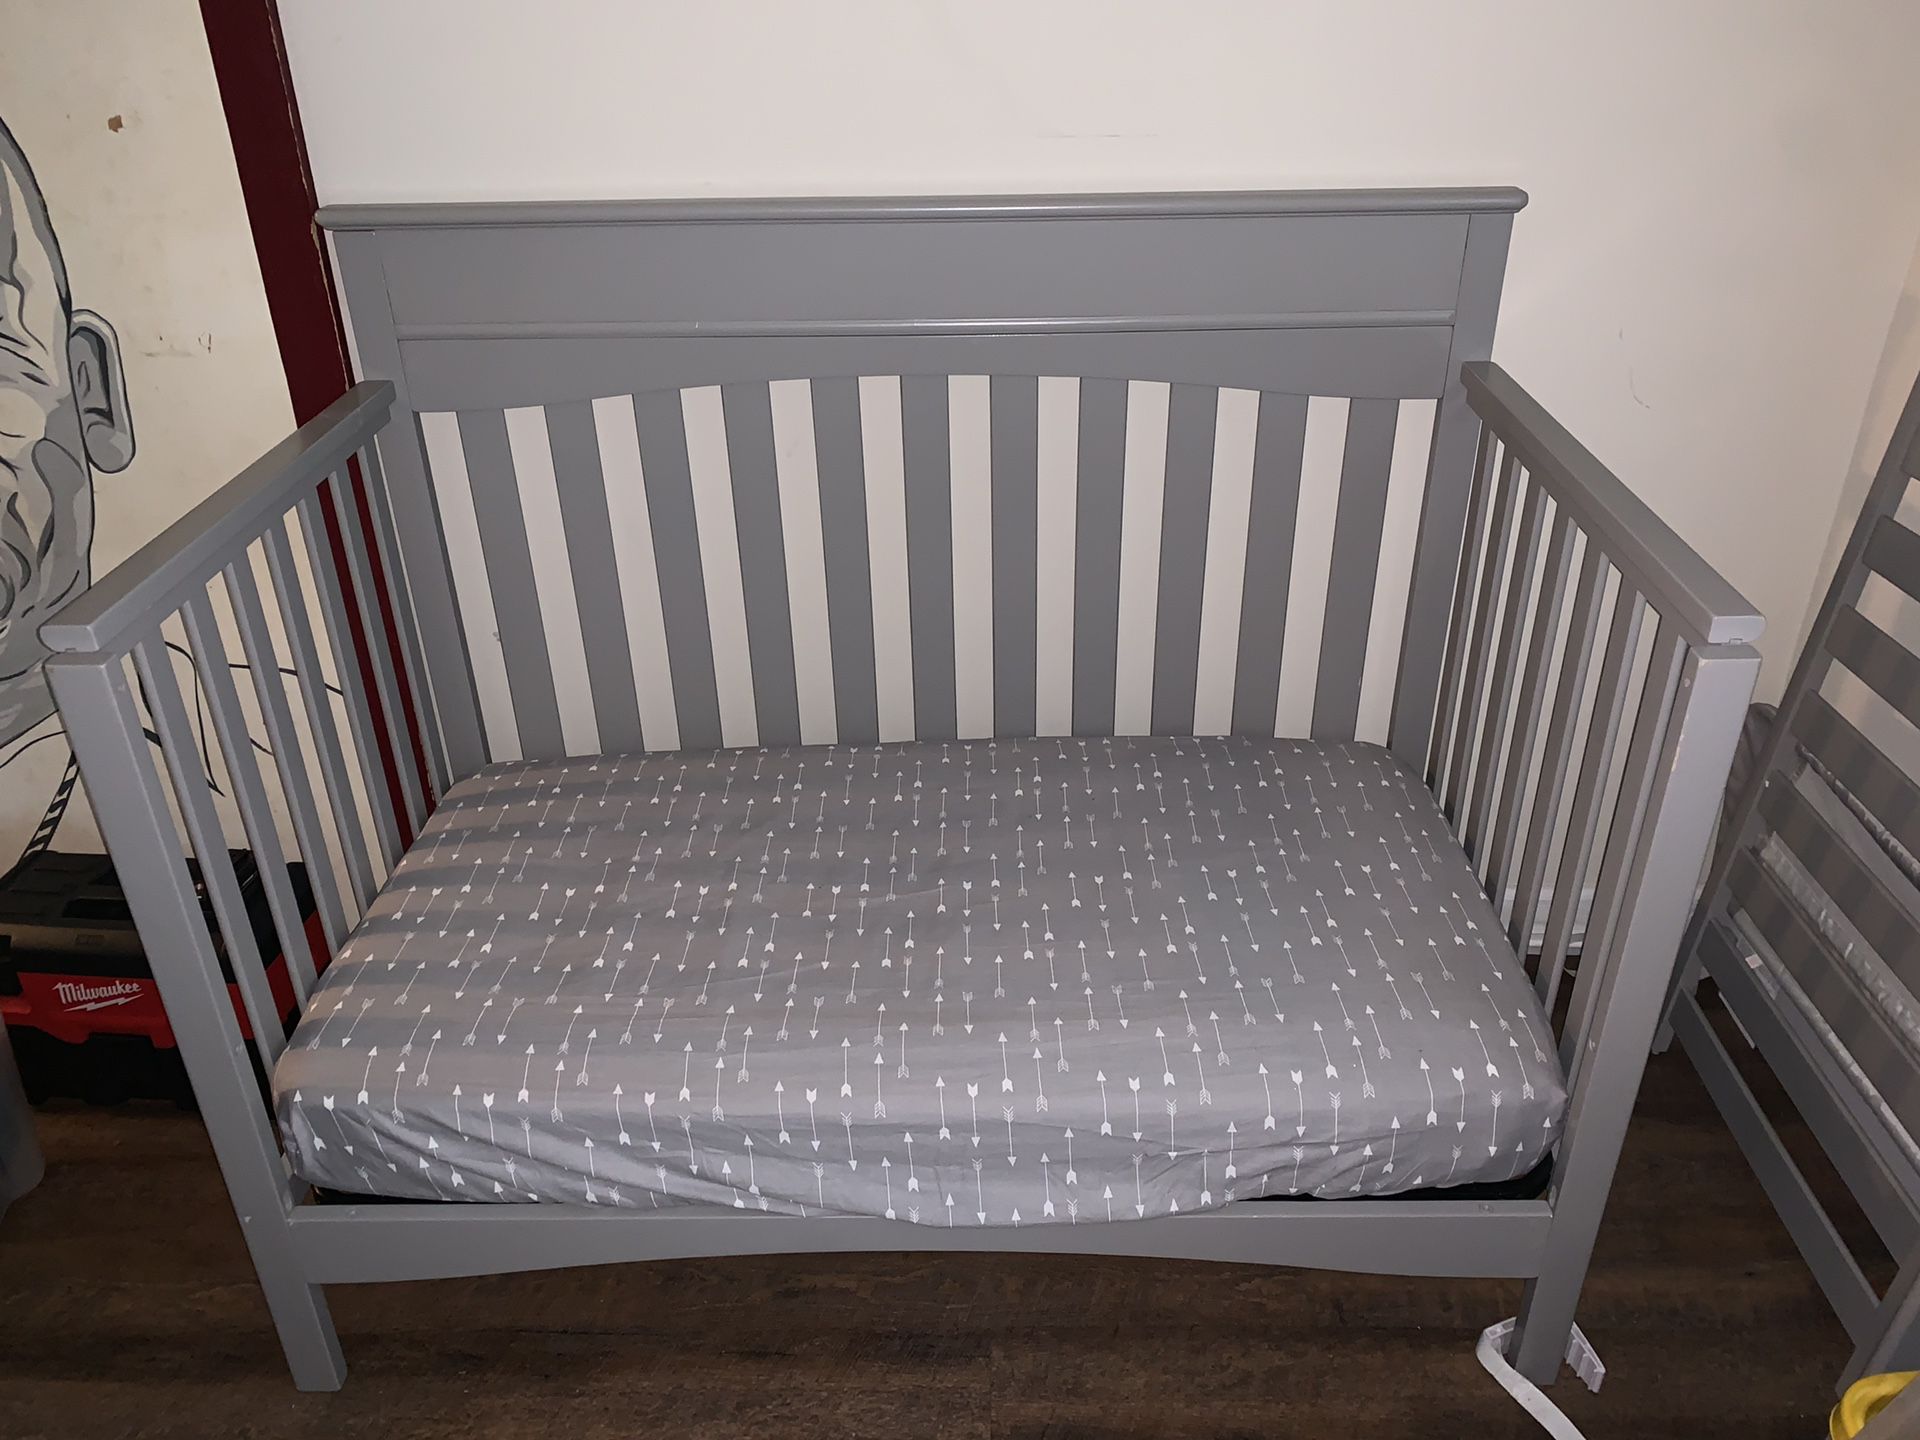 Delta children 4-in-1 crib. Last 5 pics show how the bed converts.